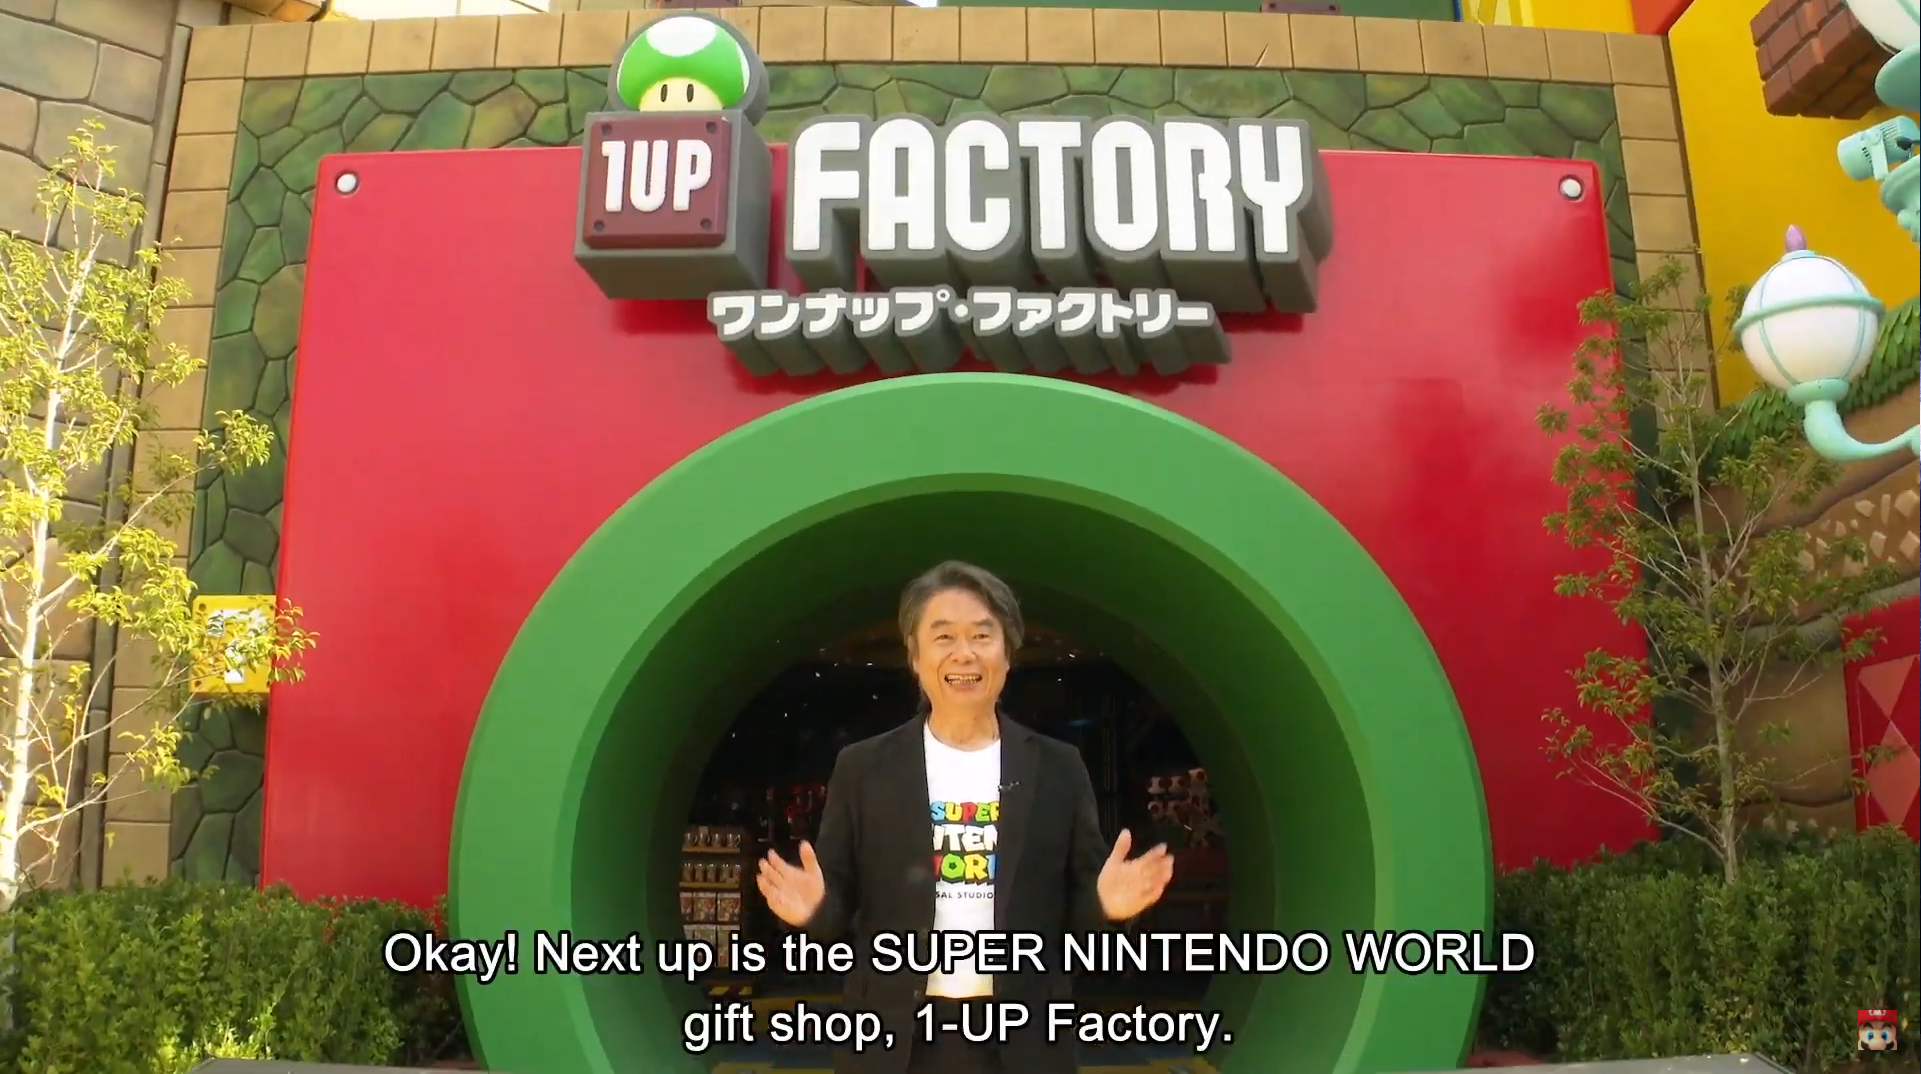 How Shigeru Miyamoto helped with Super Nintendo World